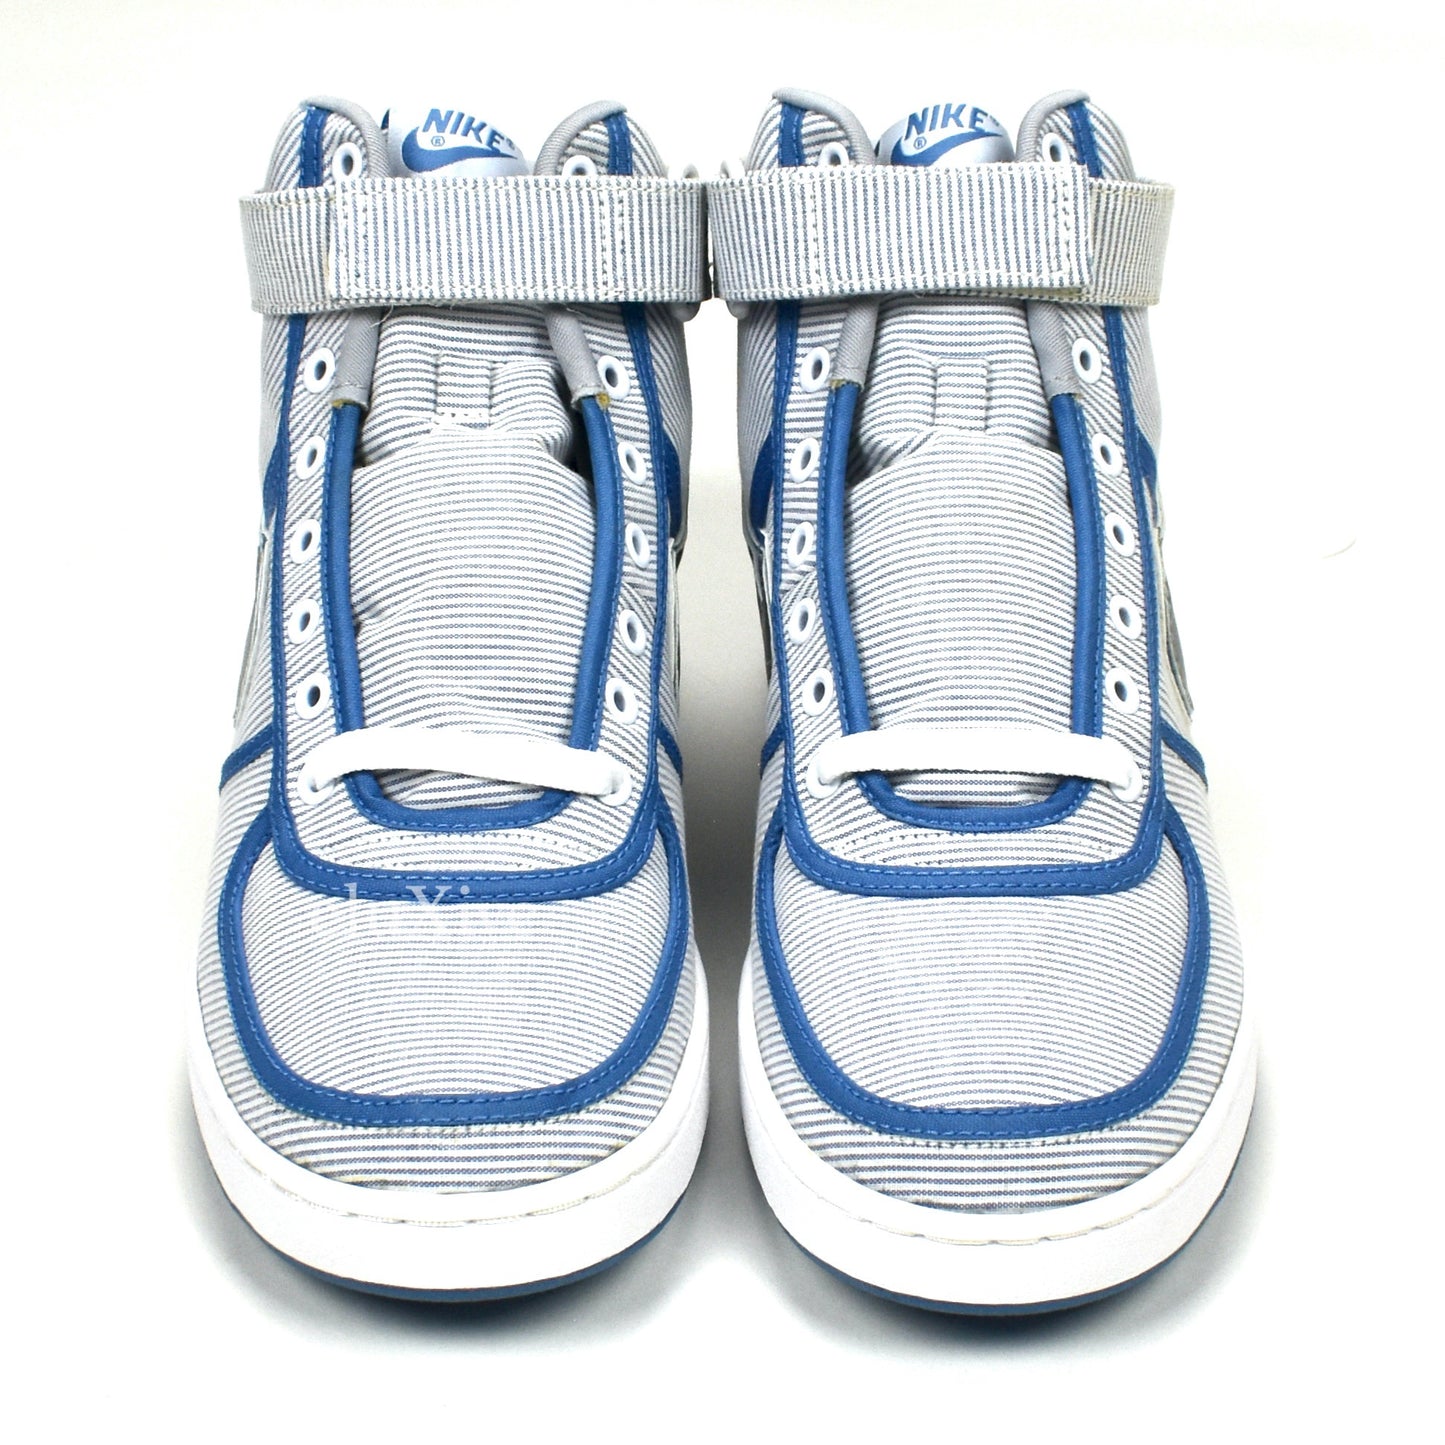 Nike - Vandal High Supreme Geoff McFetridge 'Tear Away' (Blue)